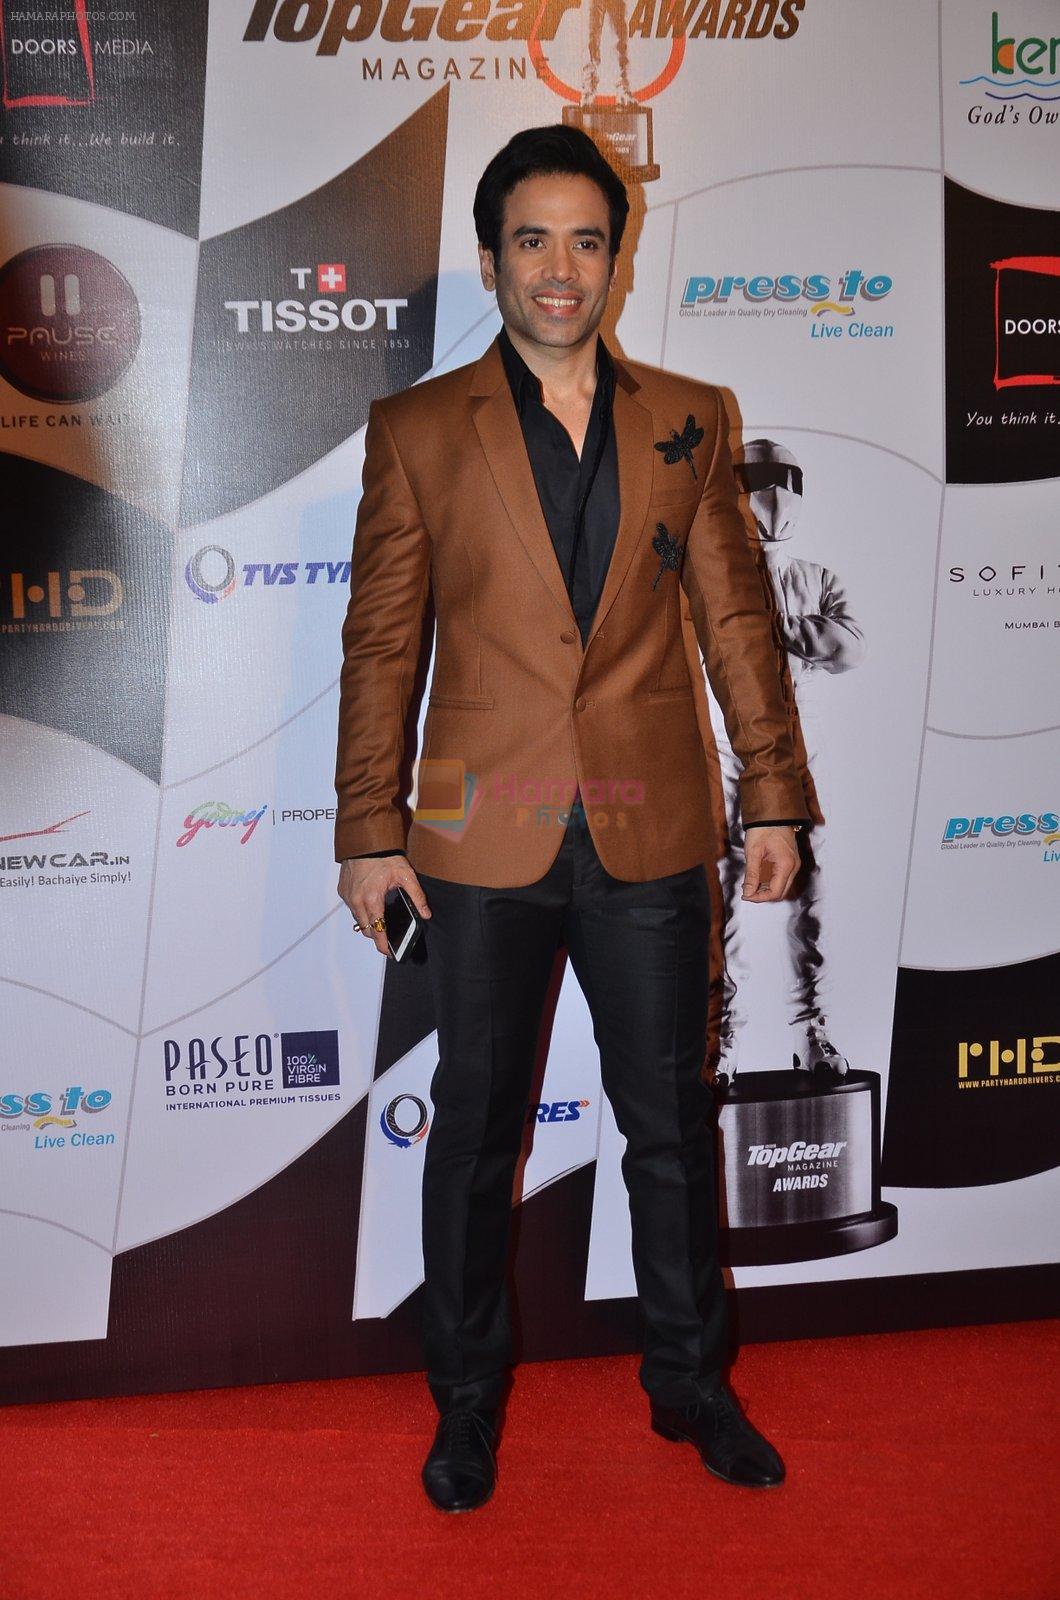 Tusshar Kapoor at Top Gear Awards in Mumbai on 28th Jan 2016